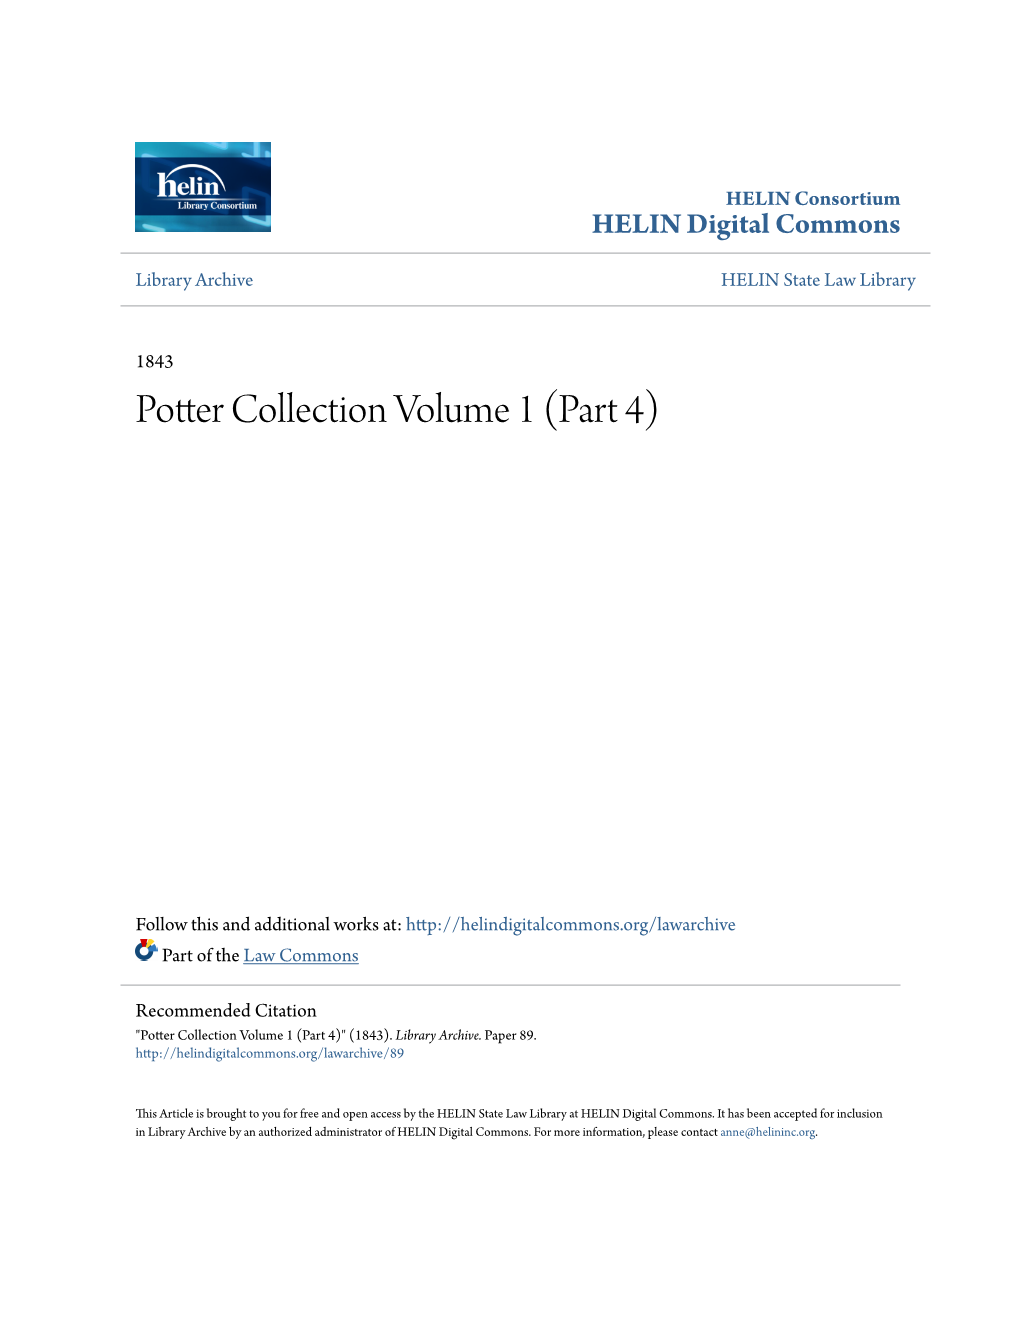 Potter Collection Volume 1 (Part 4)